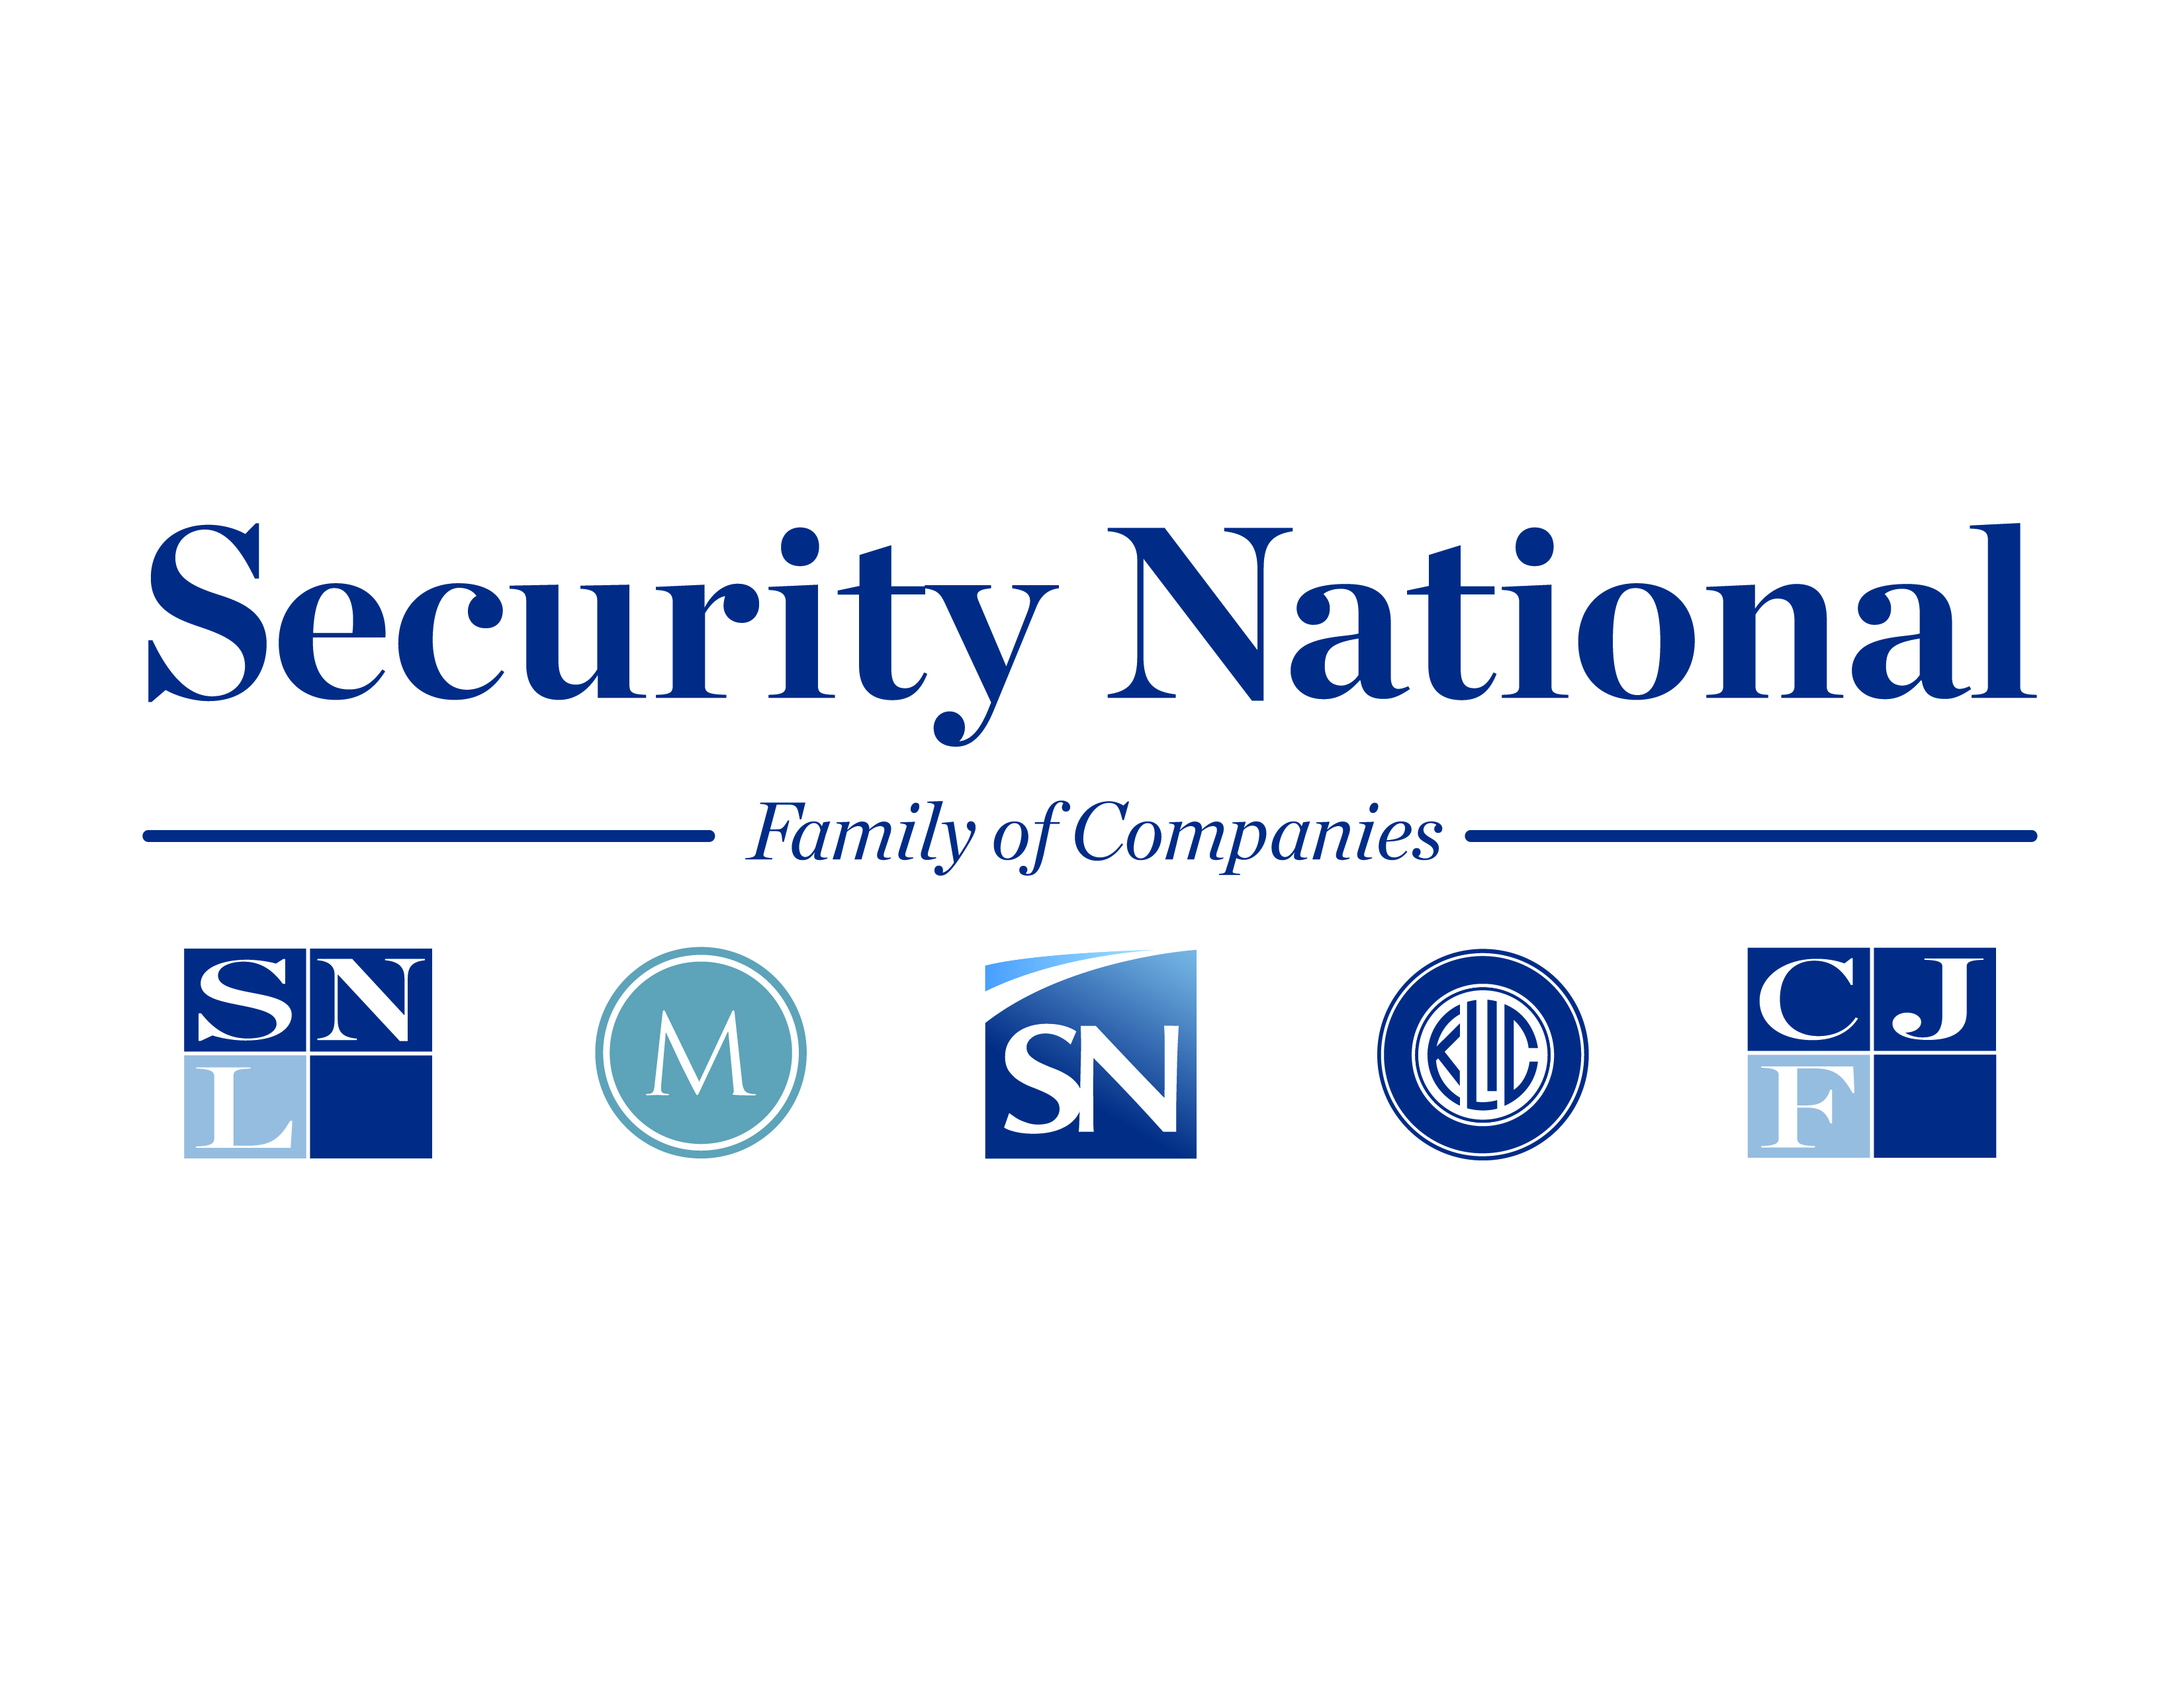 SN Family of Companies.jpg